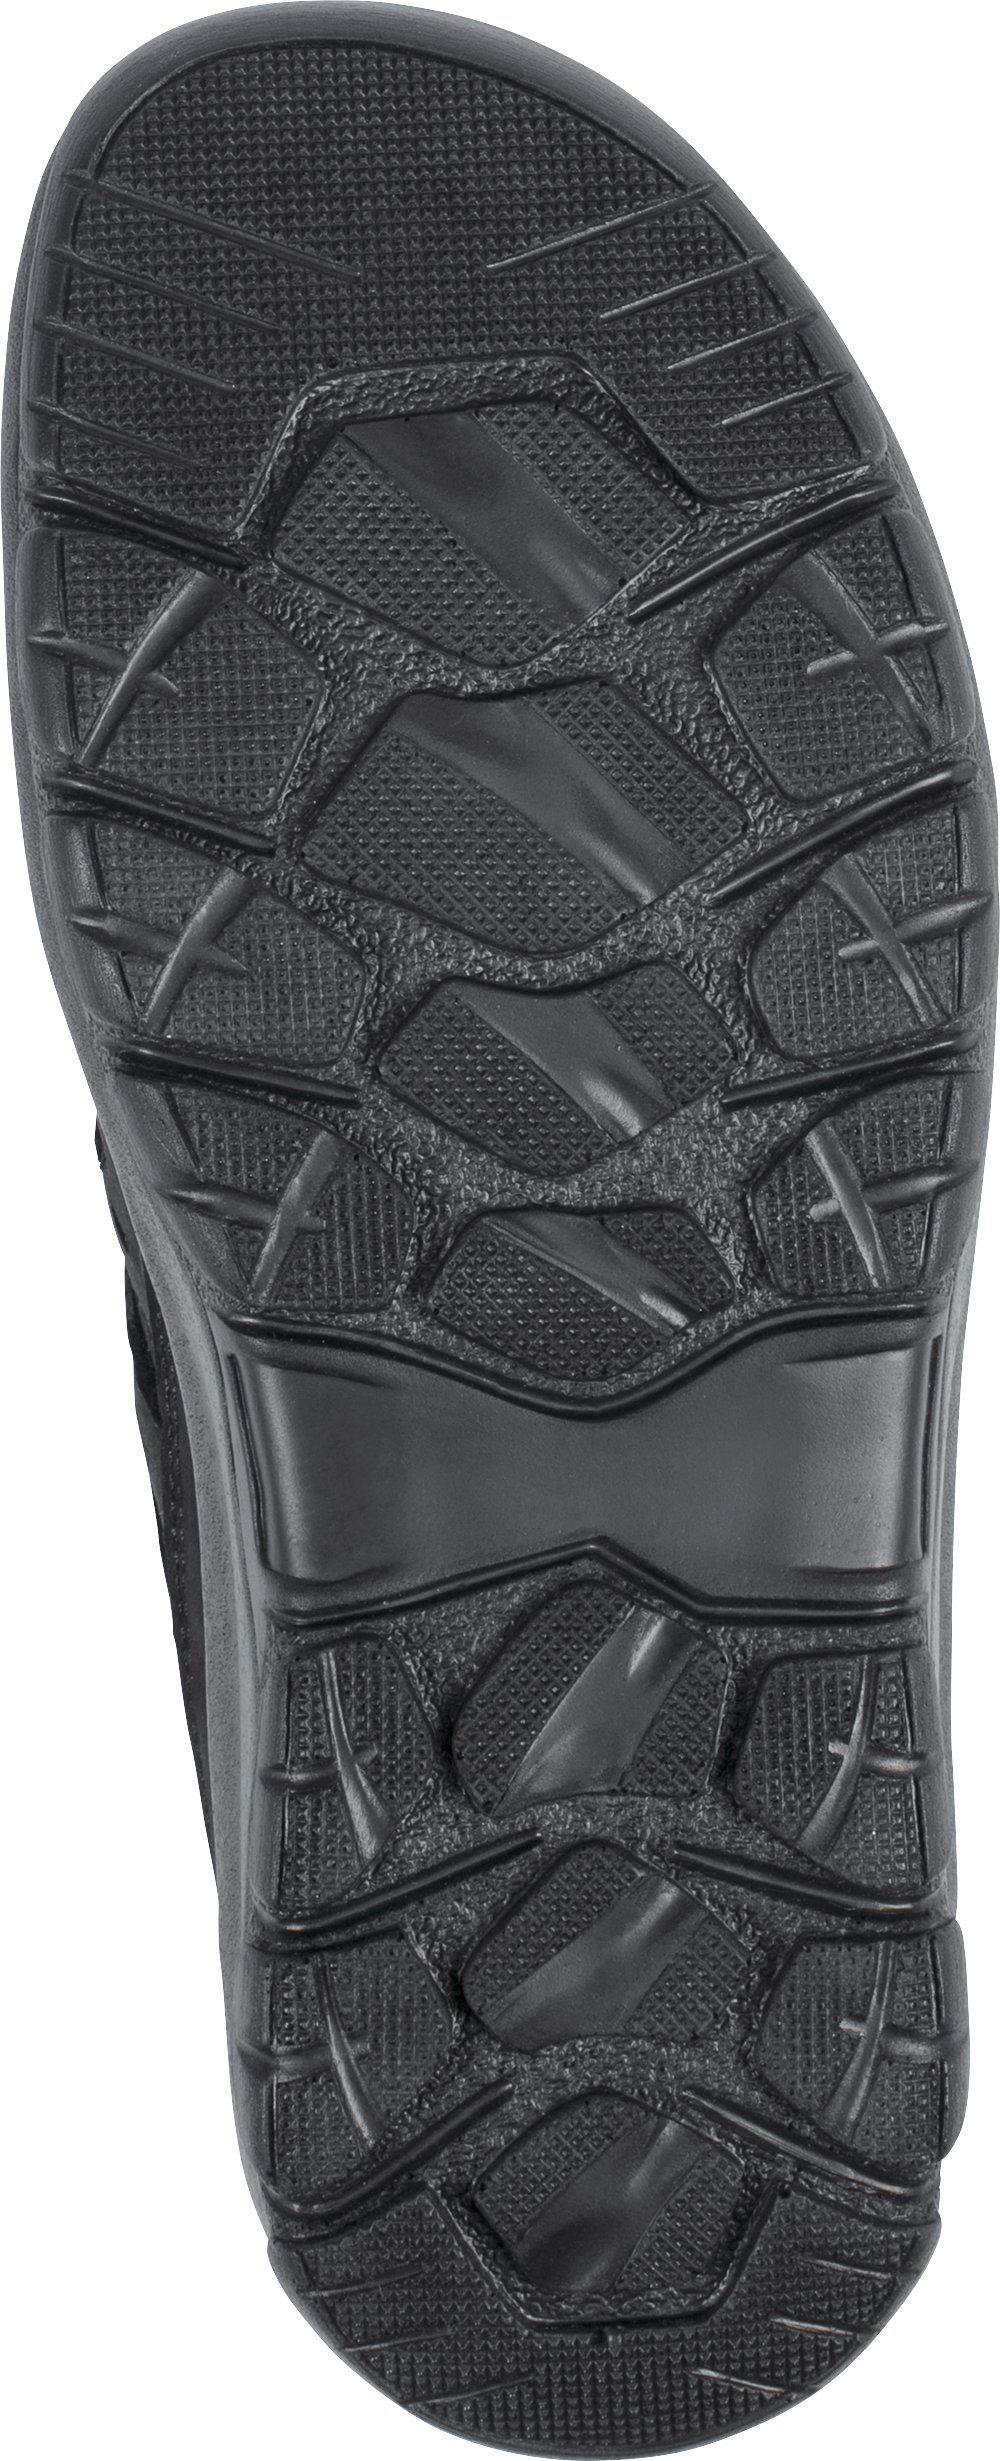 Kalapua Slipper optimale Luftzirkulation für ein angenehmes Mikroklima im  Schuh